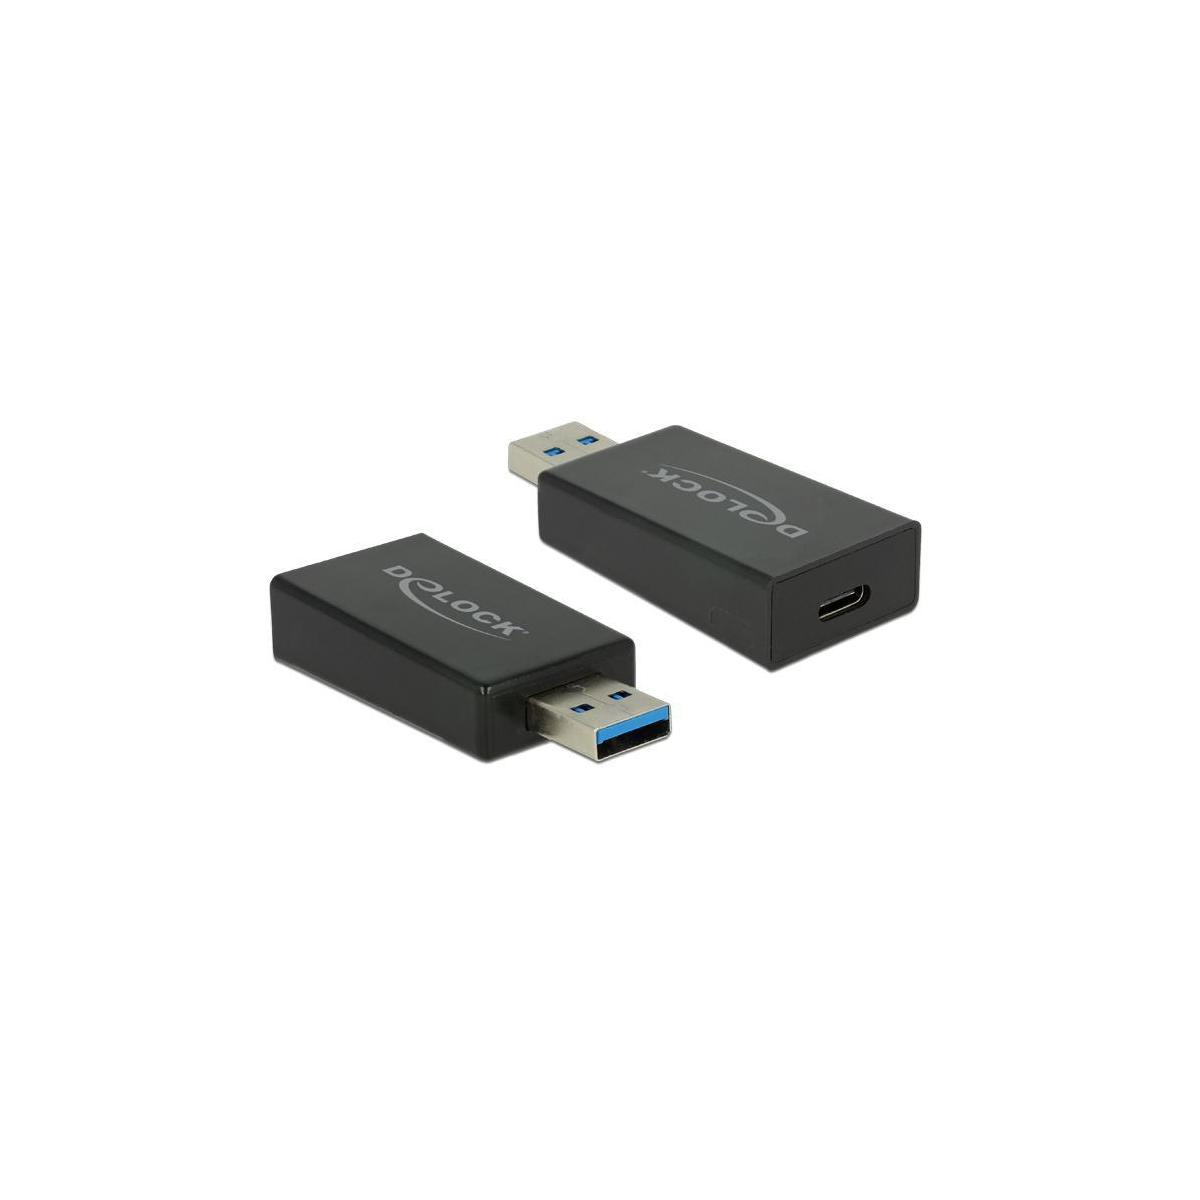 A Schwarz DELOCK & USB Kabel Type-C & USB <gt/> 3.0 Adapter Adapter, Peripheriegeräte Zubehör DELOCK &